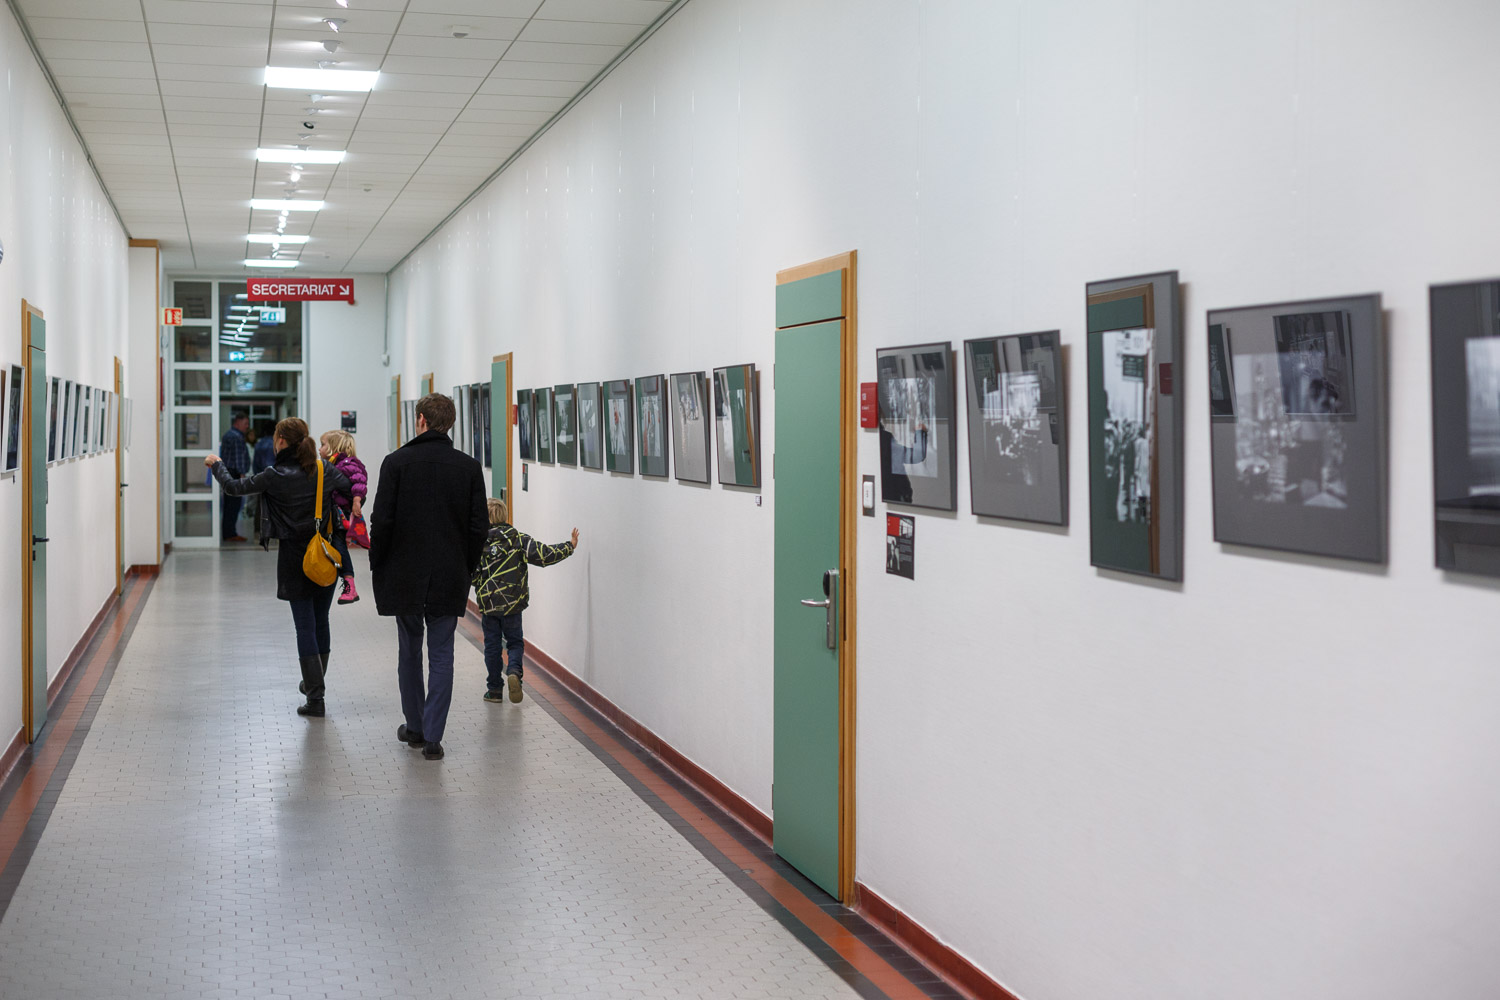 Collective exhibition by Street Photography Luxembourg at the Lycée de Garçons Esch-sur-Alzette